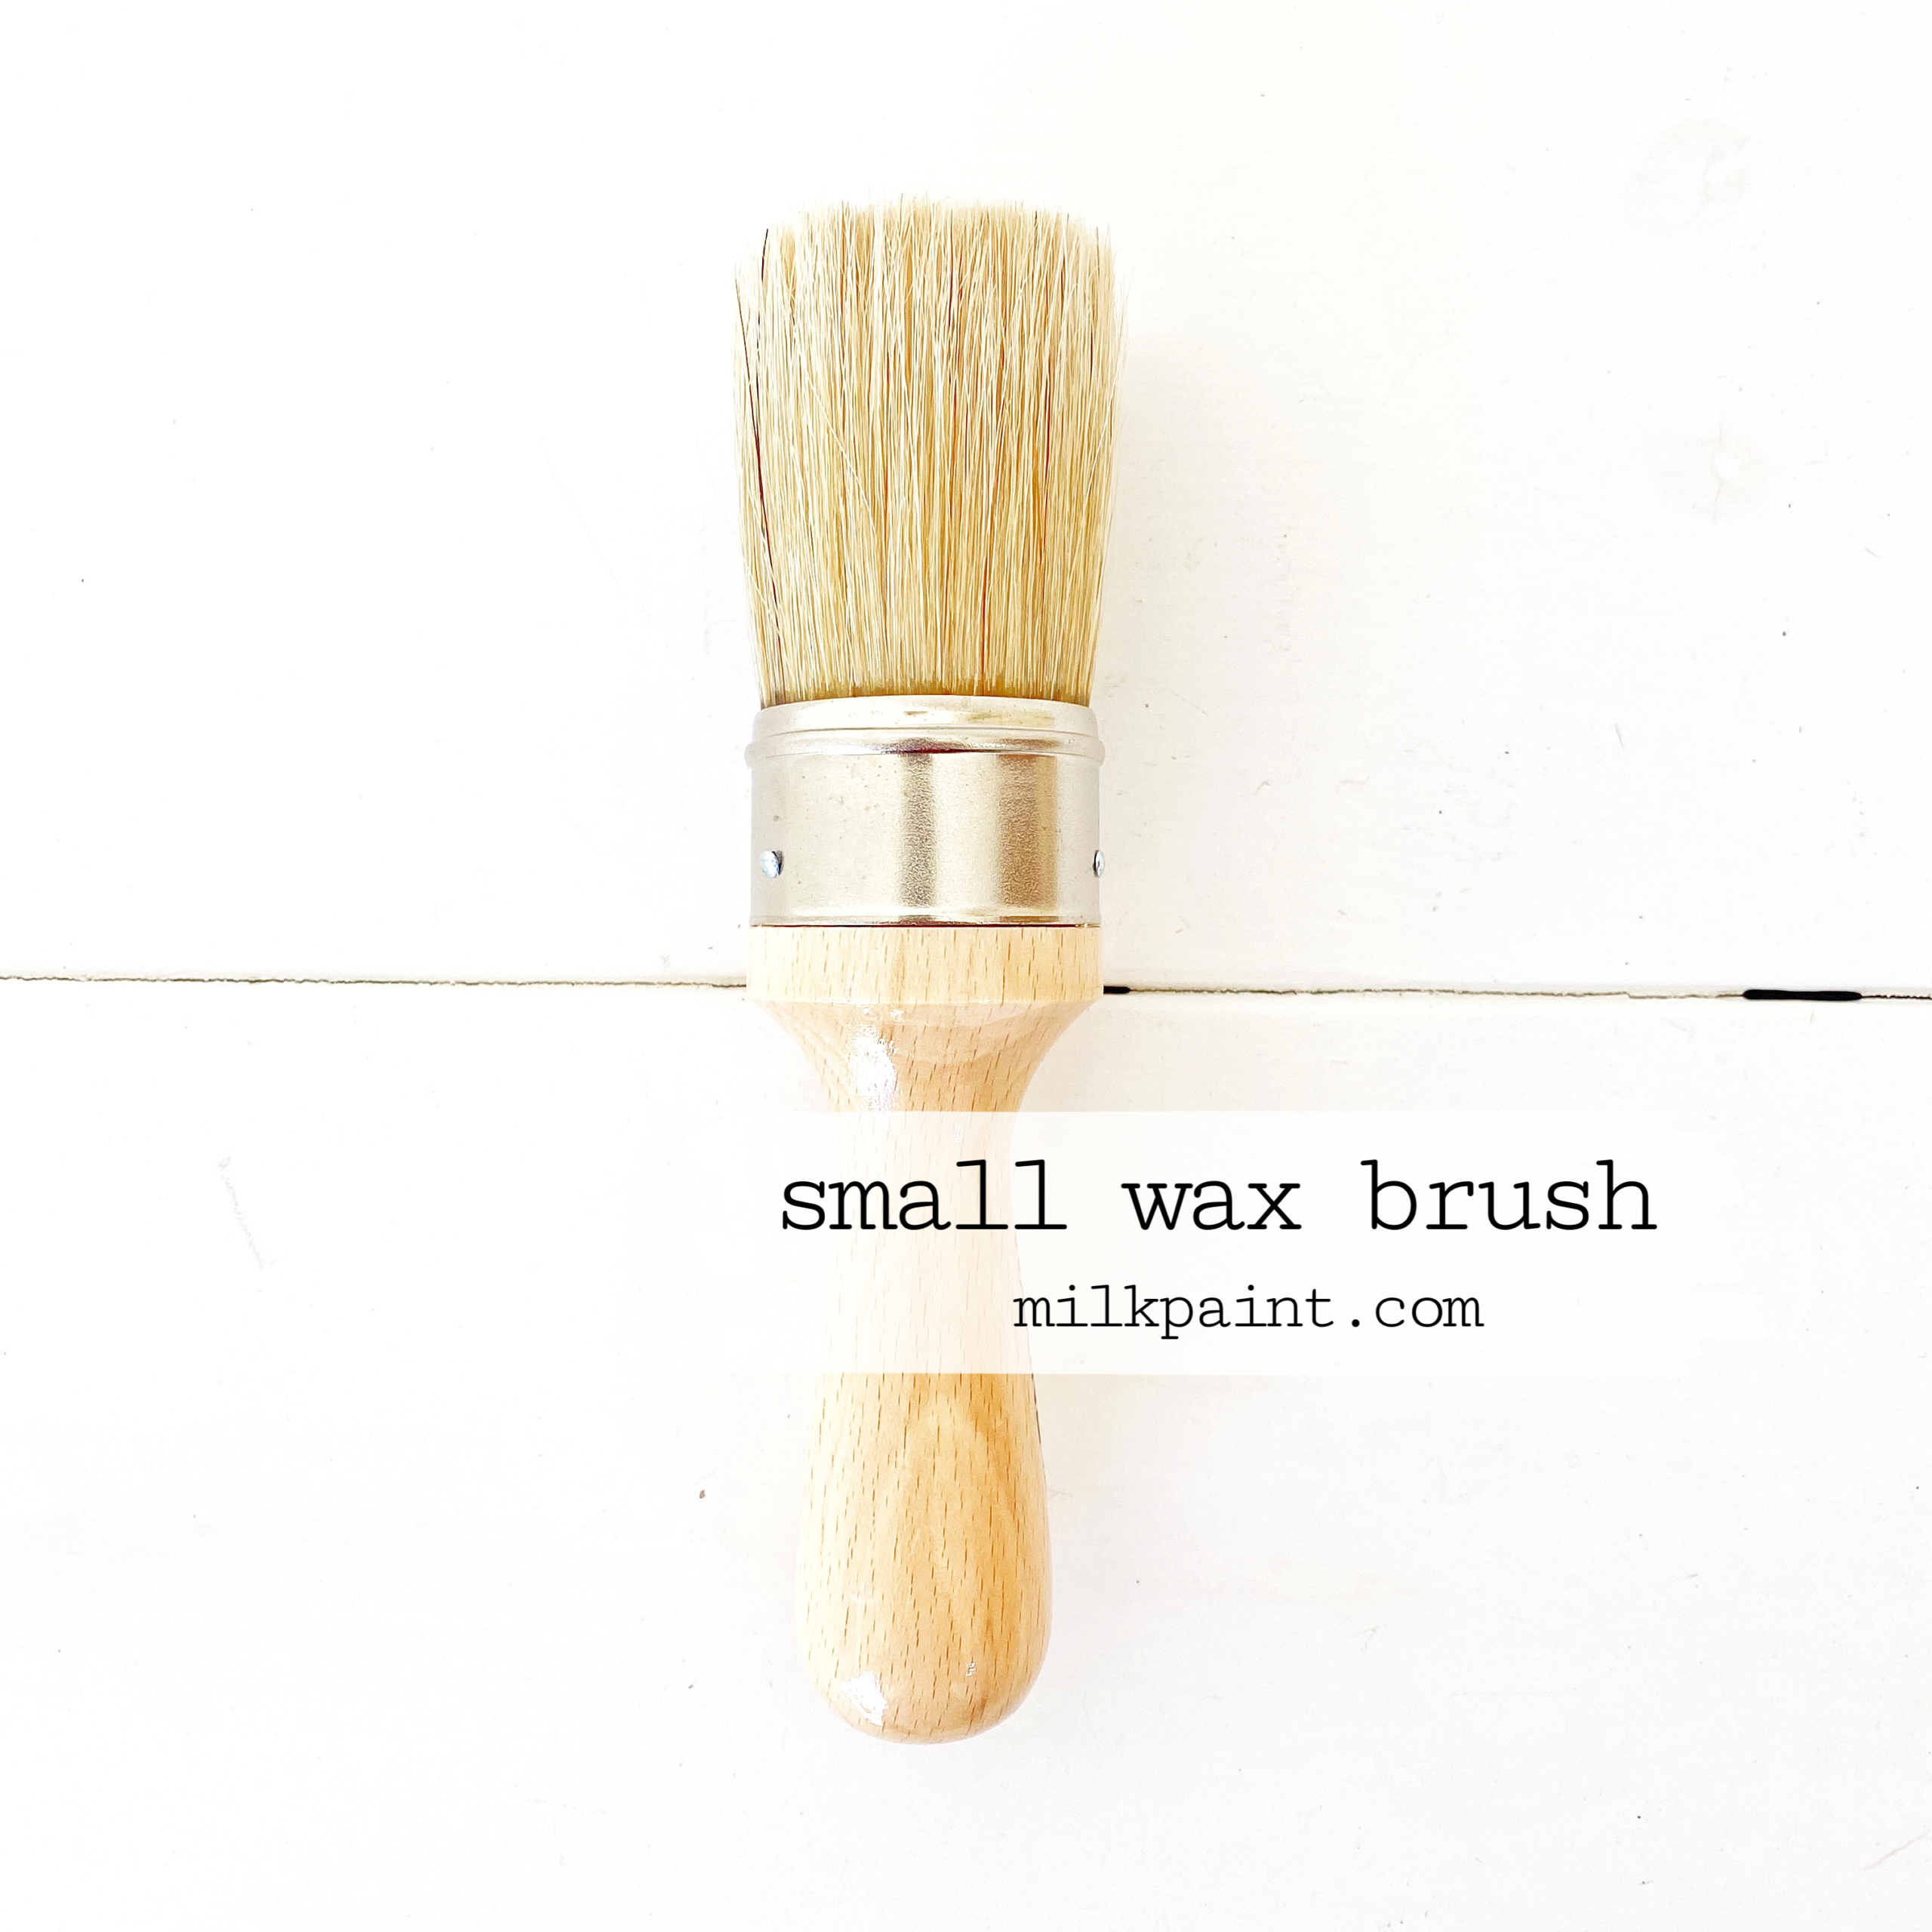 small wax brush - Milk Paint